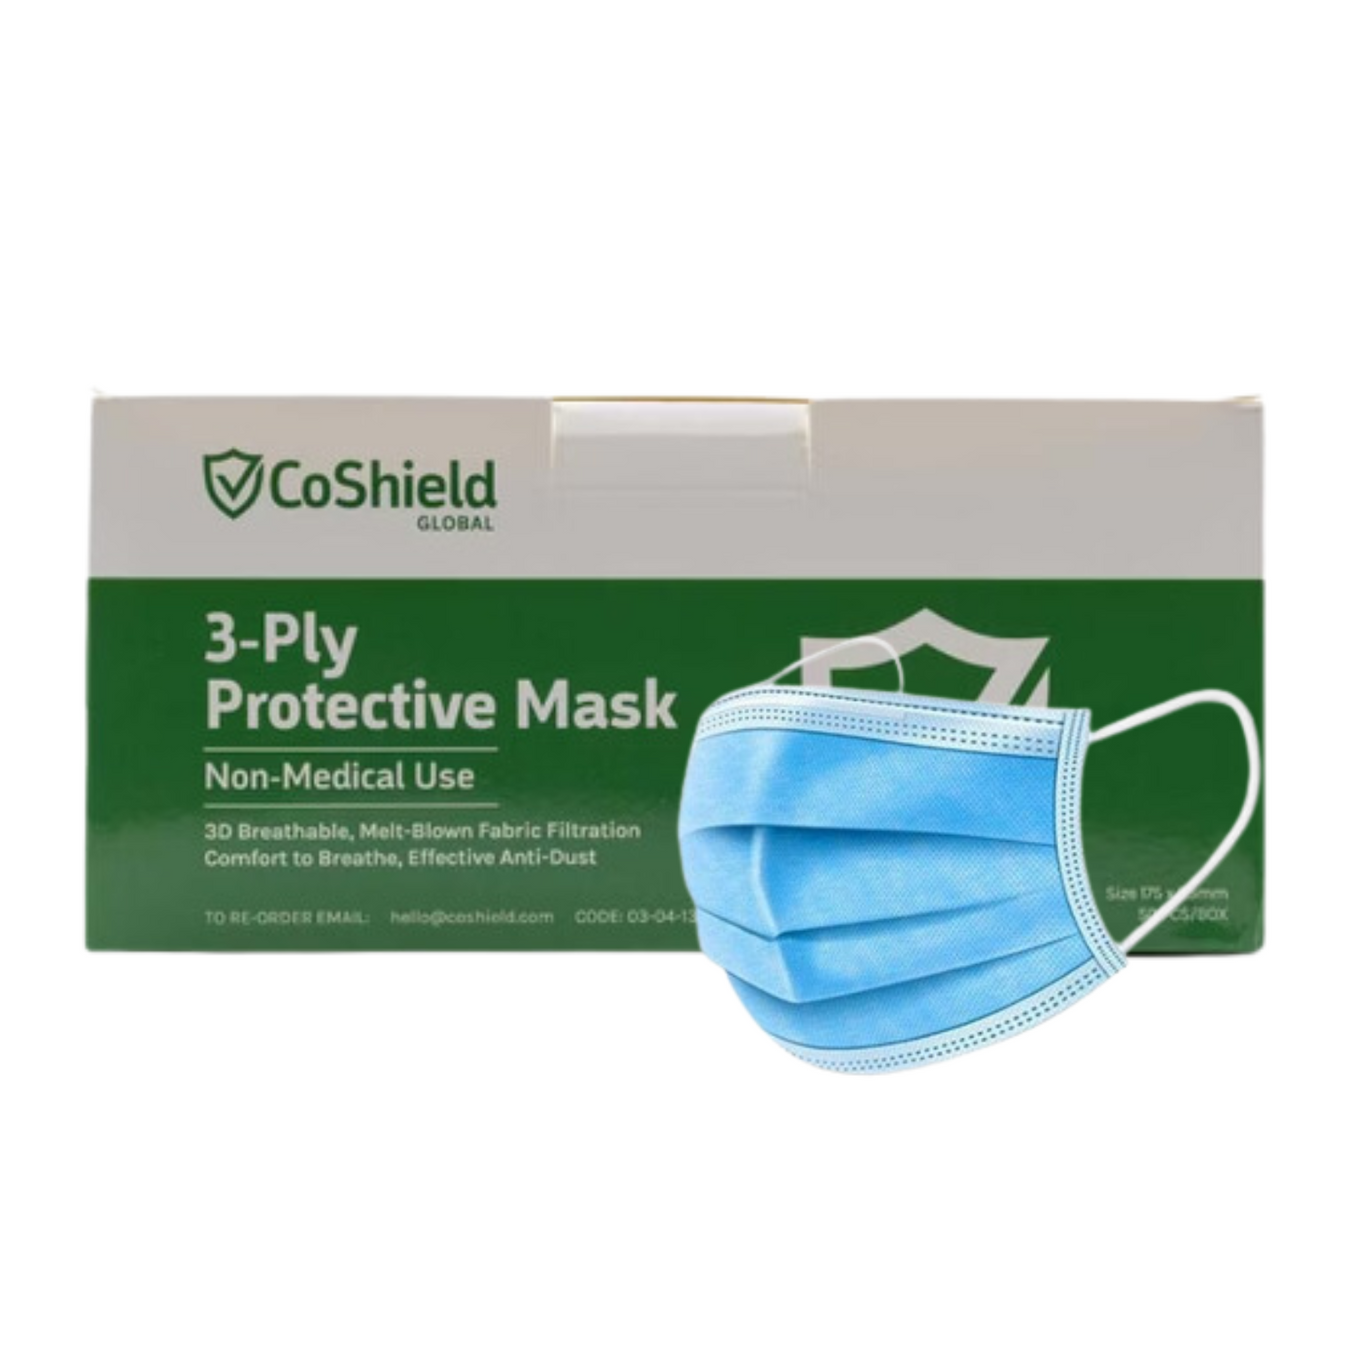 2. Face Masks & Disposable Respirators